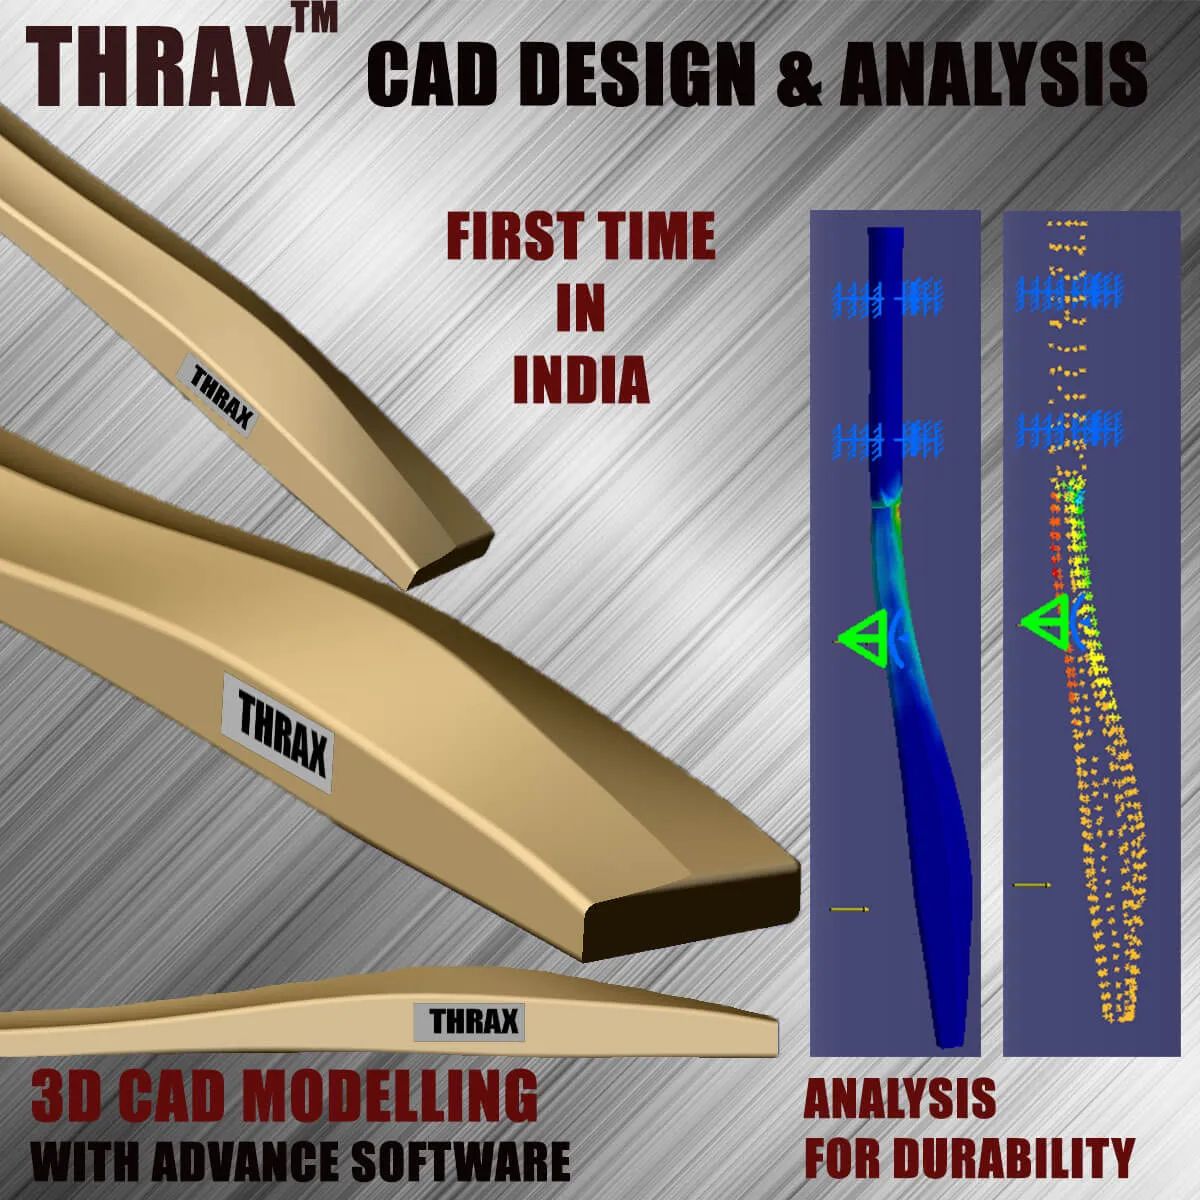 Thrax_Cricket_bat_CAD_DESIGH_Analysis.jpg